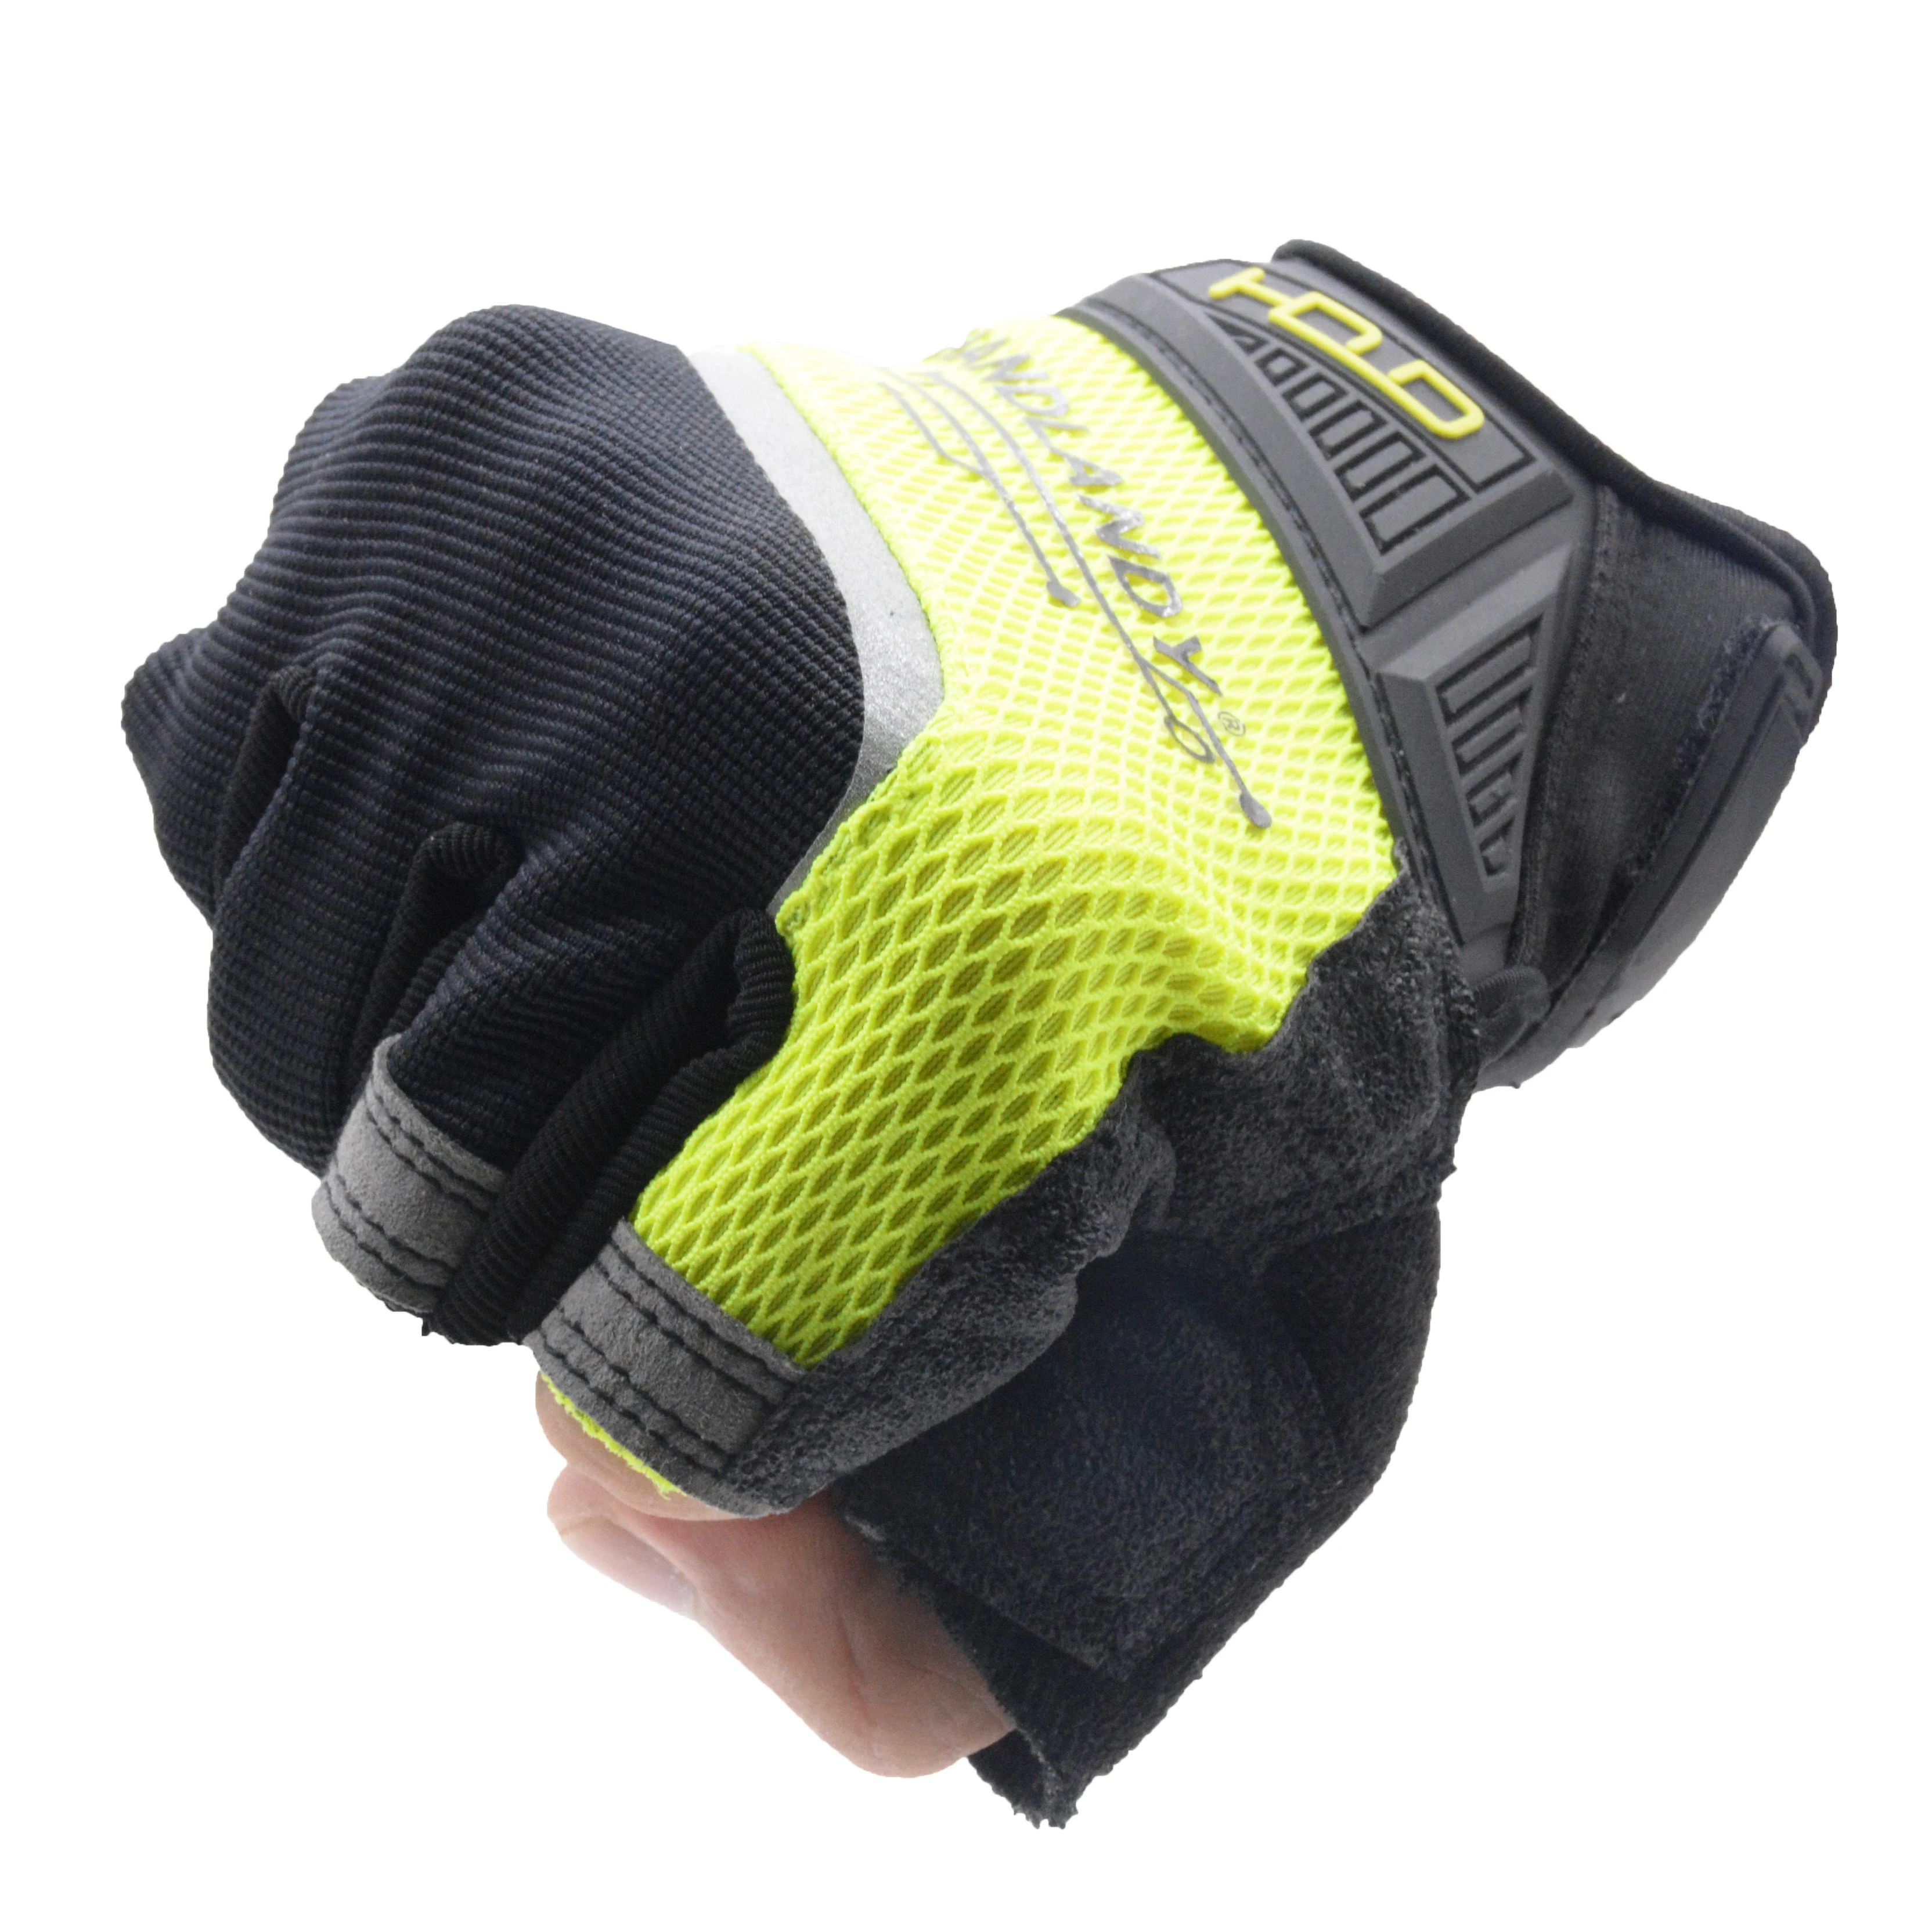 HANDLANDY In Stock 3 Open Fingers Anti-vibration Work Gloves Construction Assembly Gloves Auto Mechanic Gloves